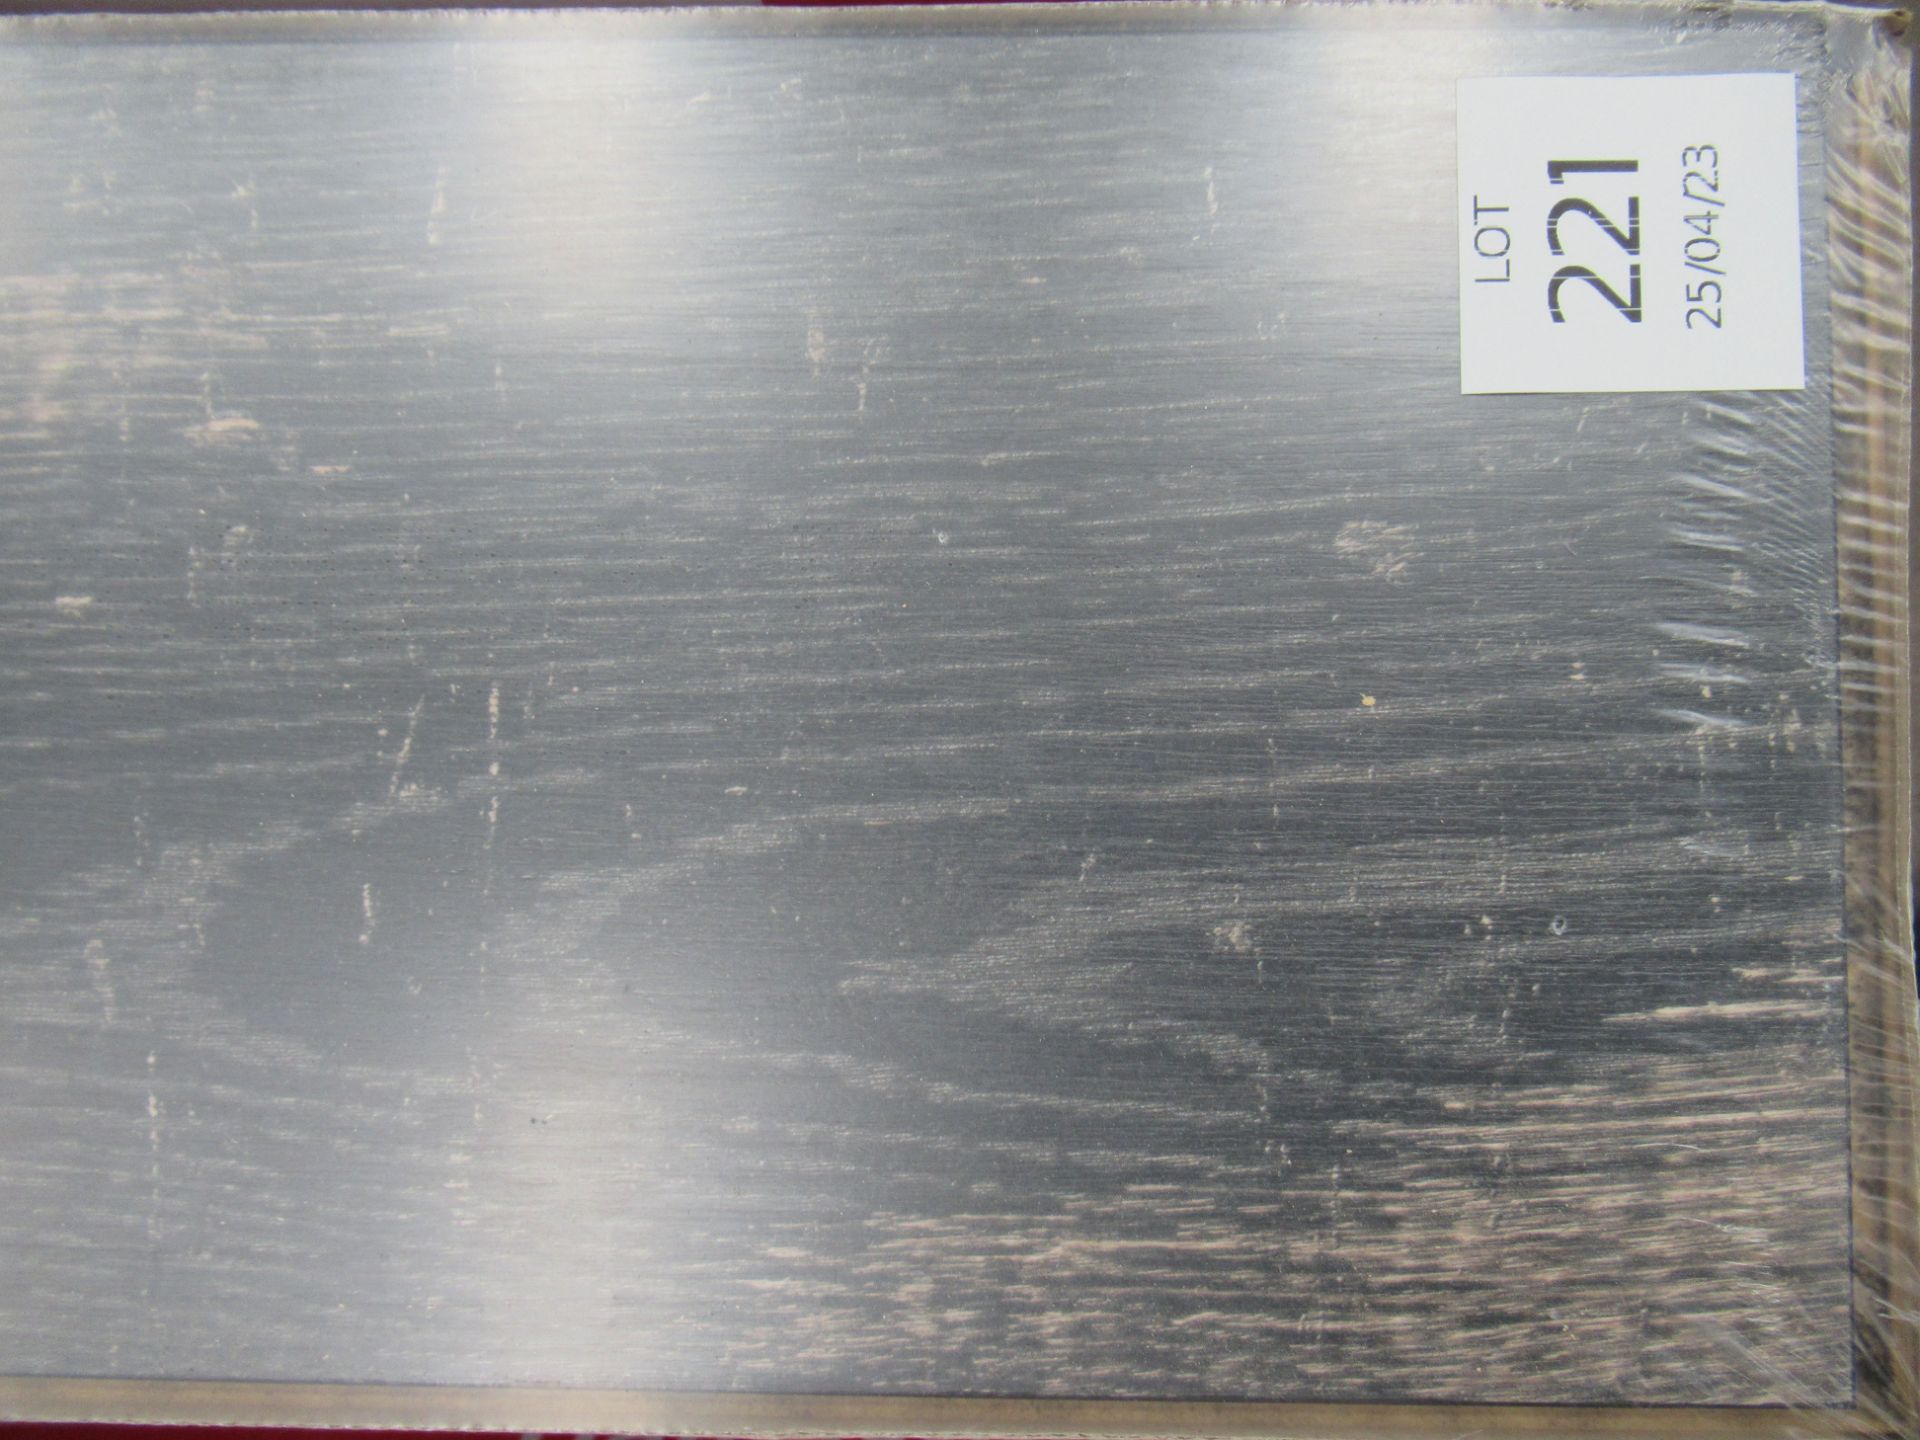 6x Packs of Egger Pro Laminate Flooring in Black Halford Oak - 2.0m2 per pack. - Image 3 of 4